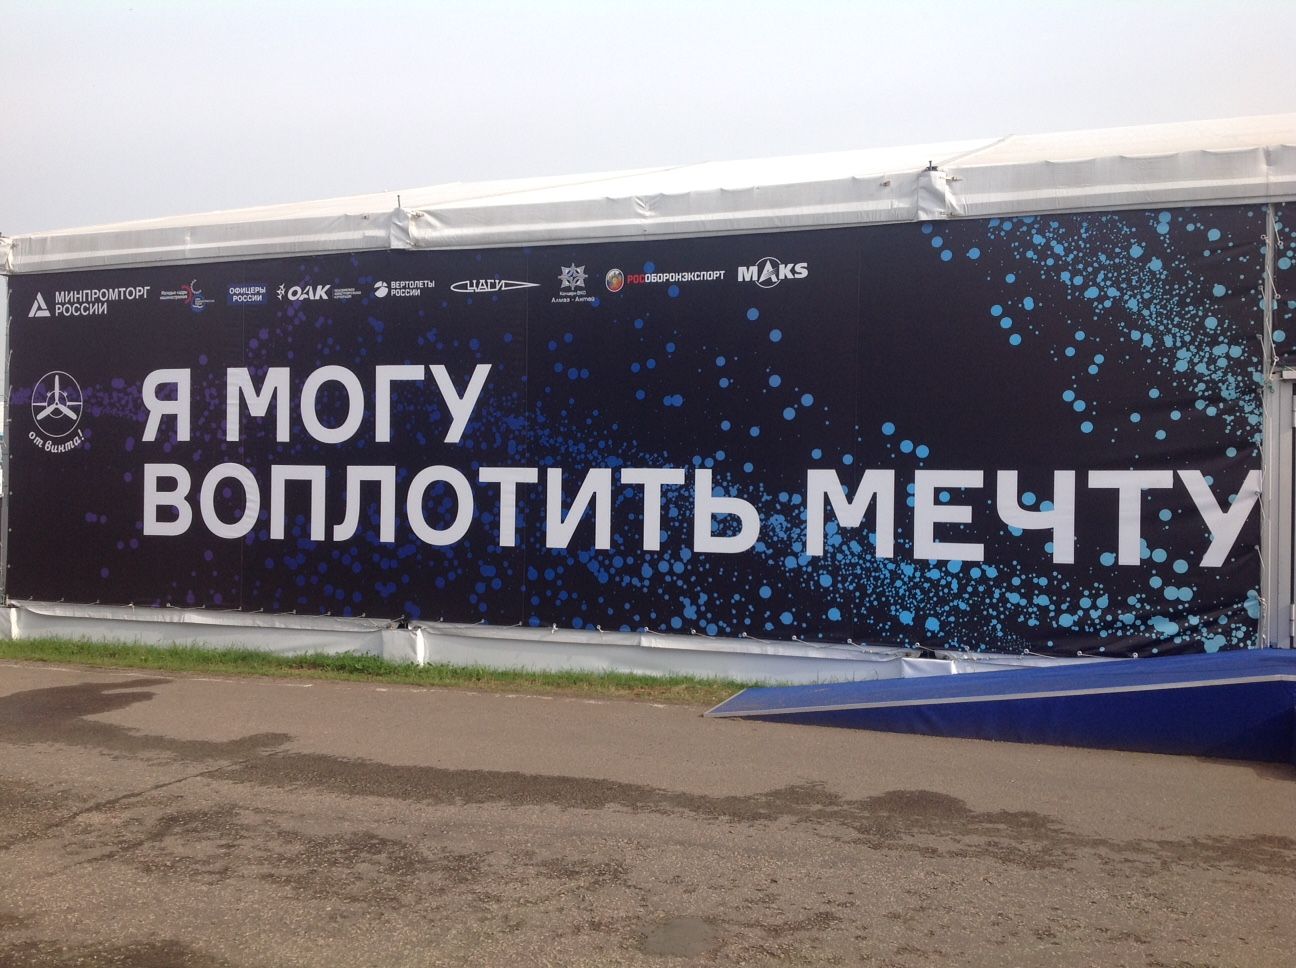 Делегация из Челябинска приехала в Москву на фестиваль научно-технического творчества «От винта!»